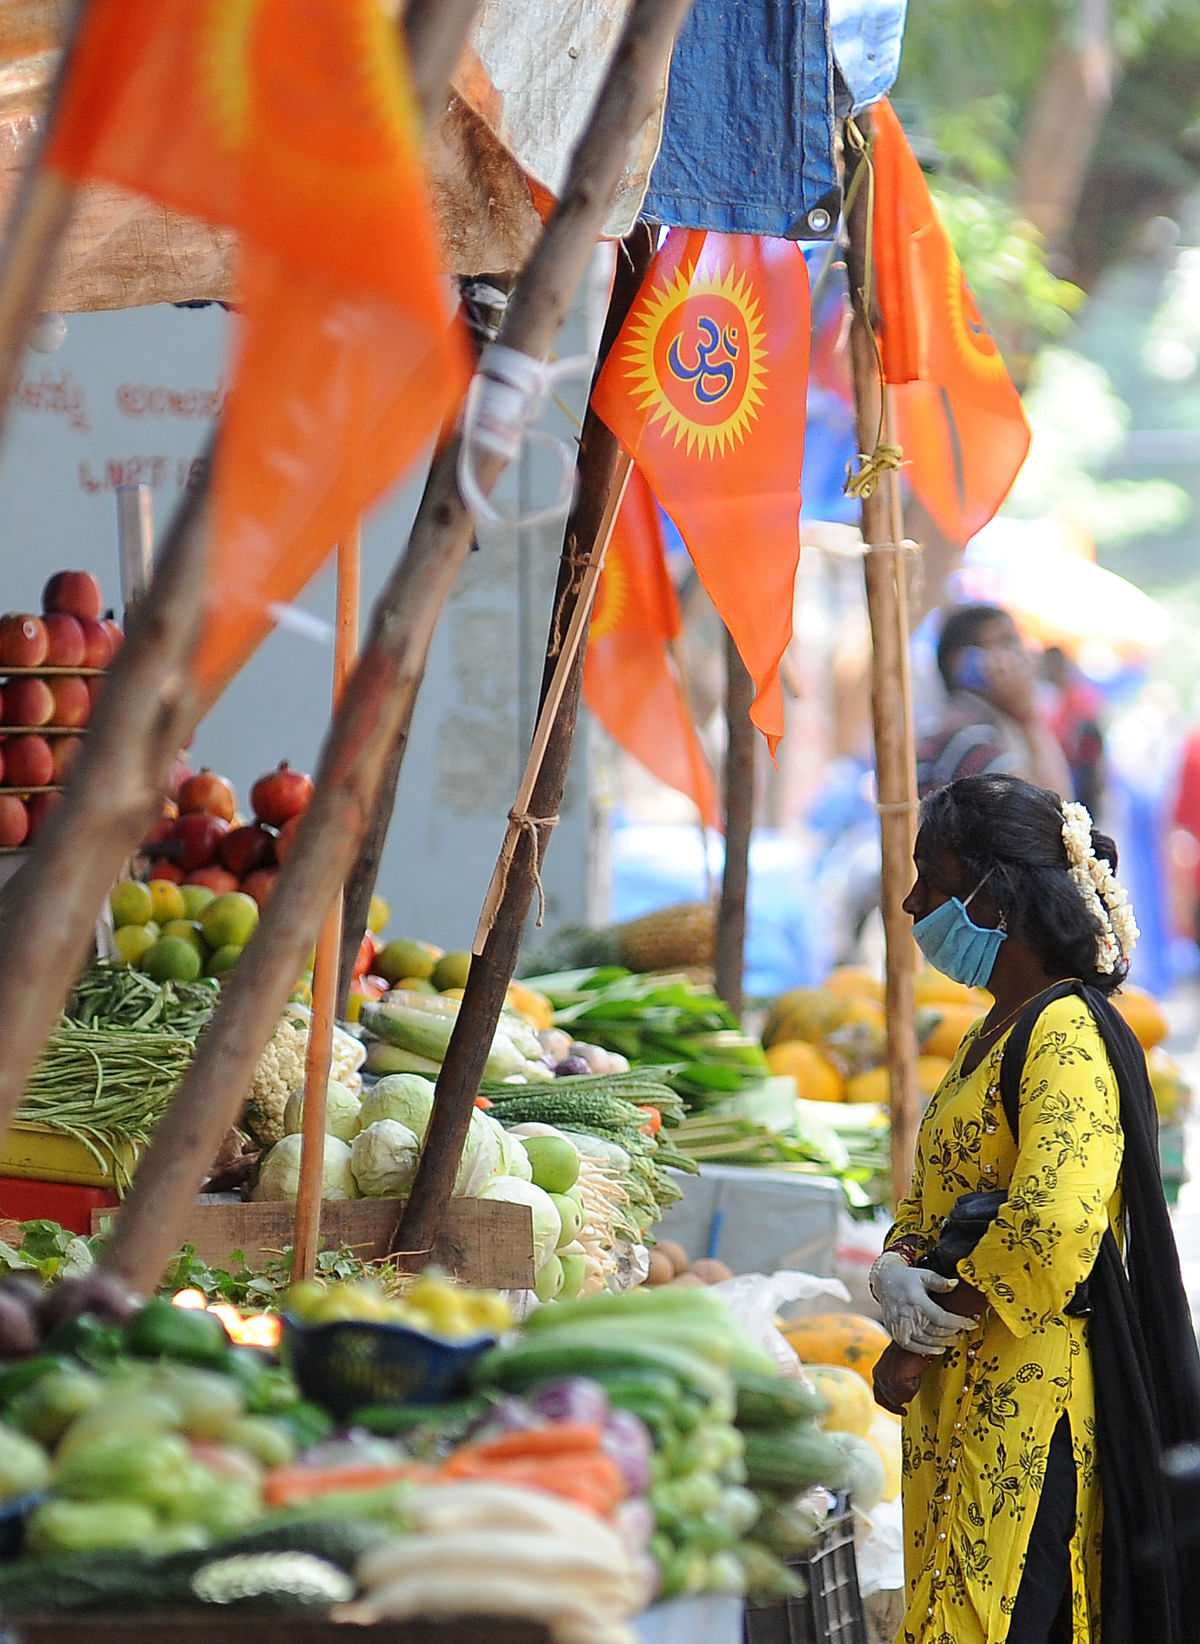 Saffron flags introduce religious divide at Vijayanagar market